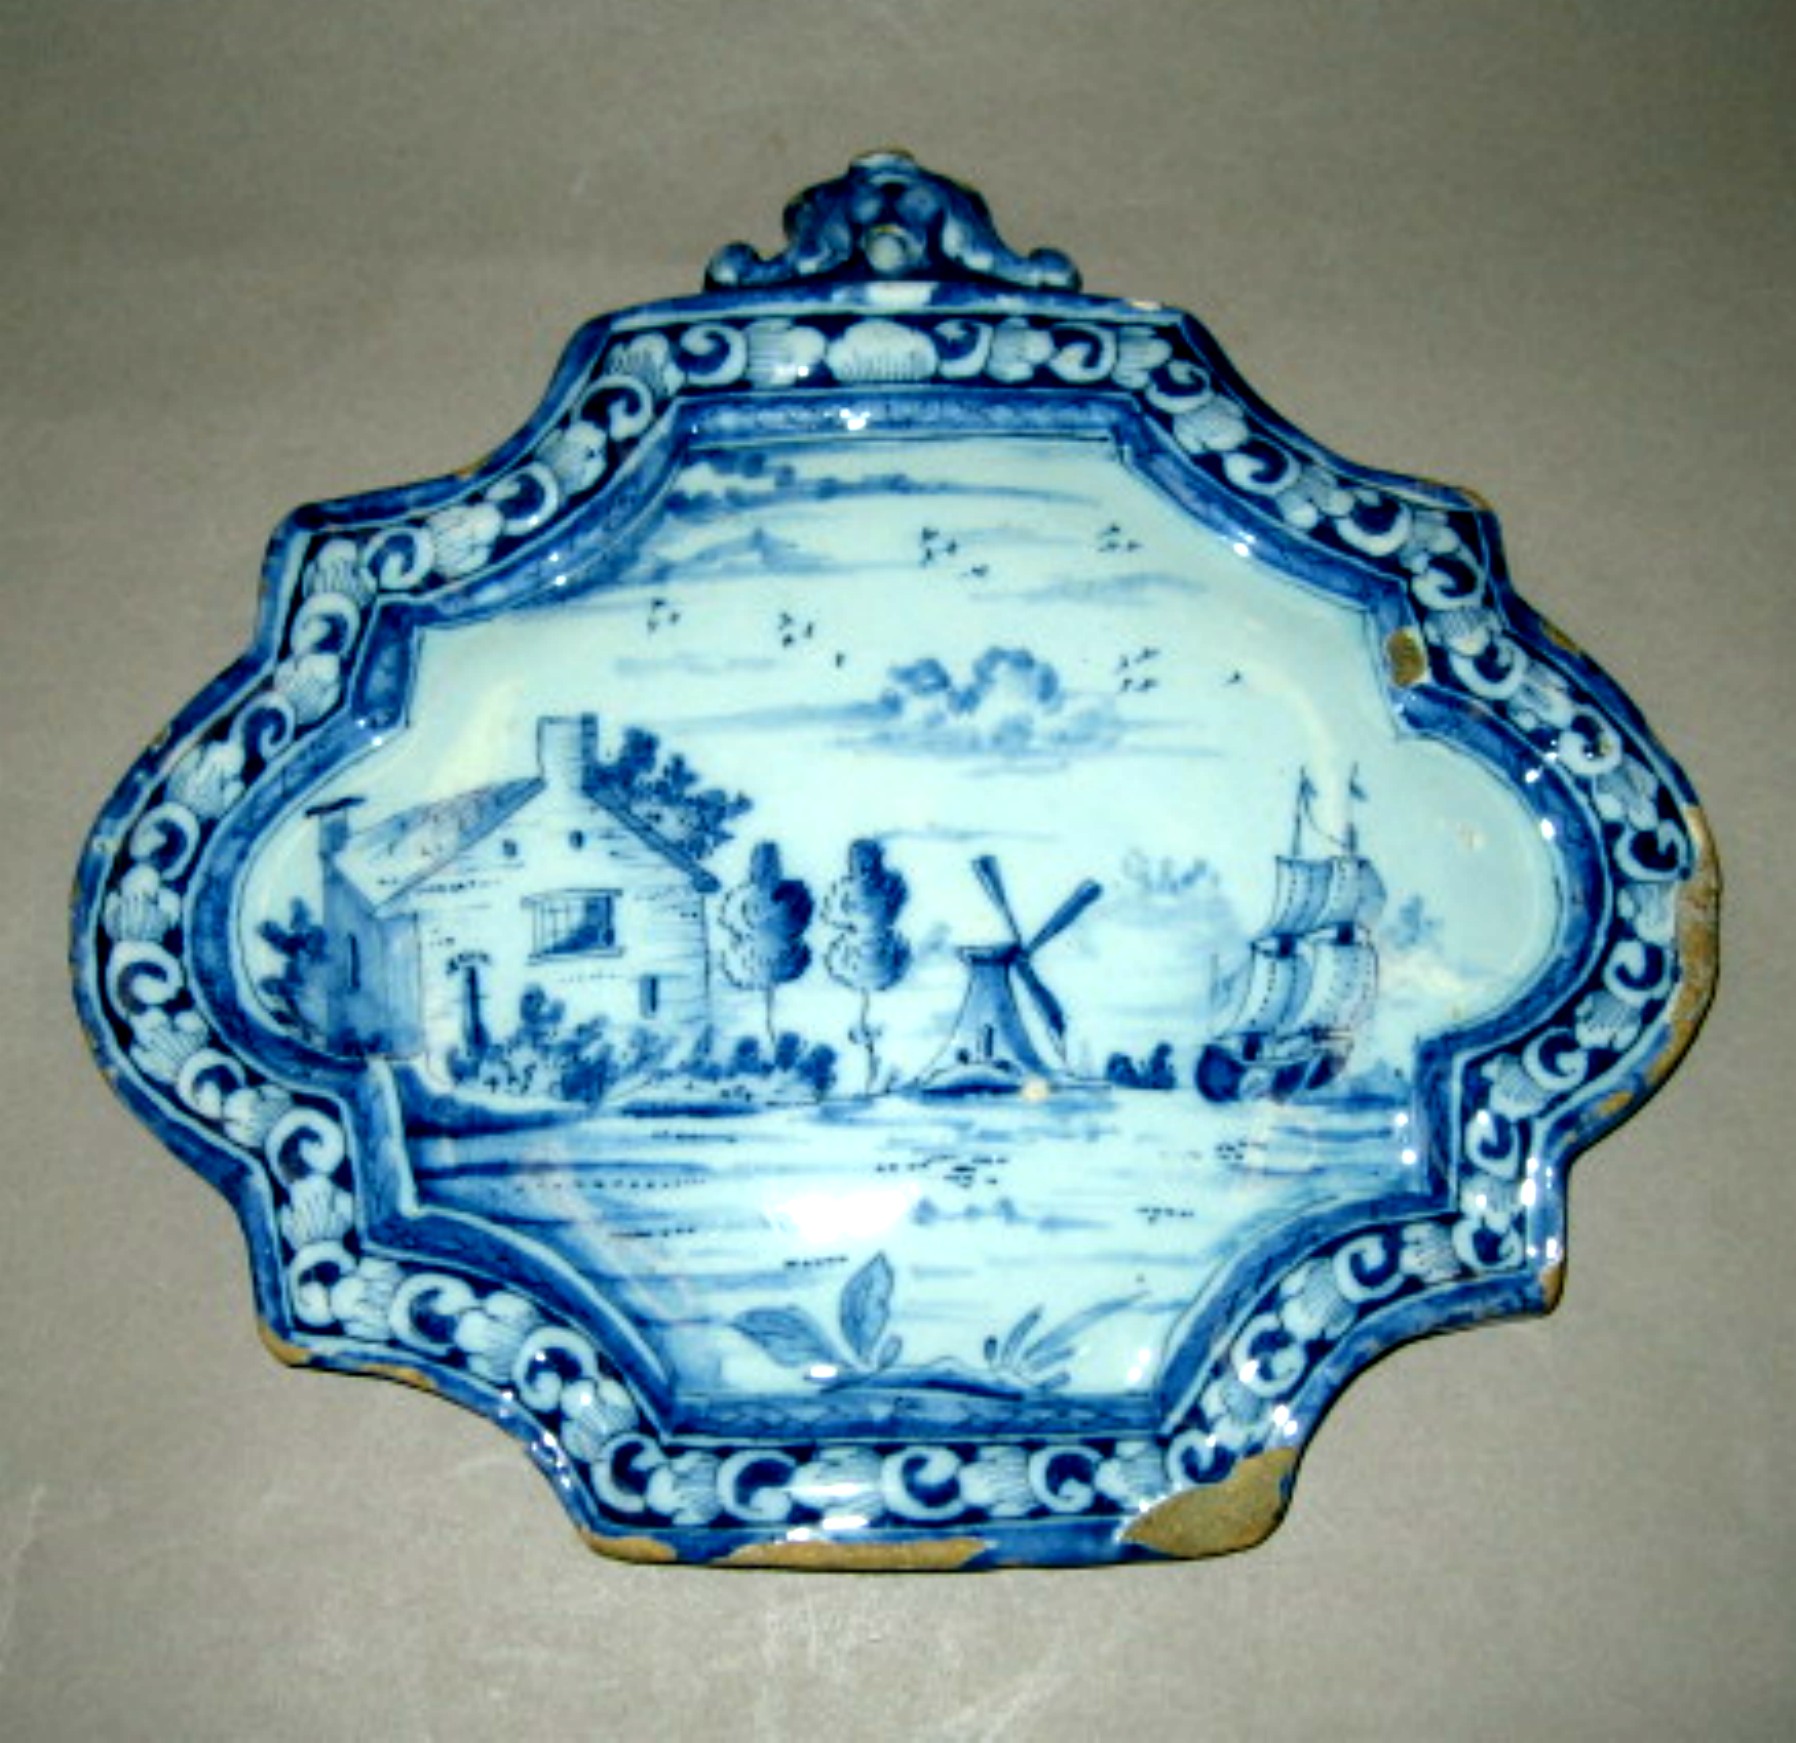 1959.2688 Tin-glazed earthenware plaque